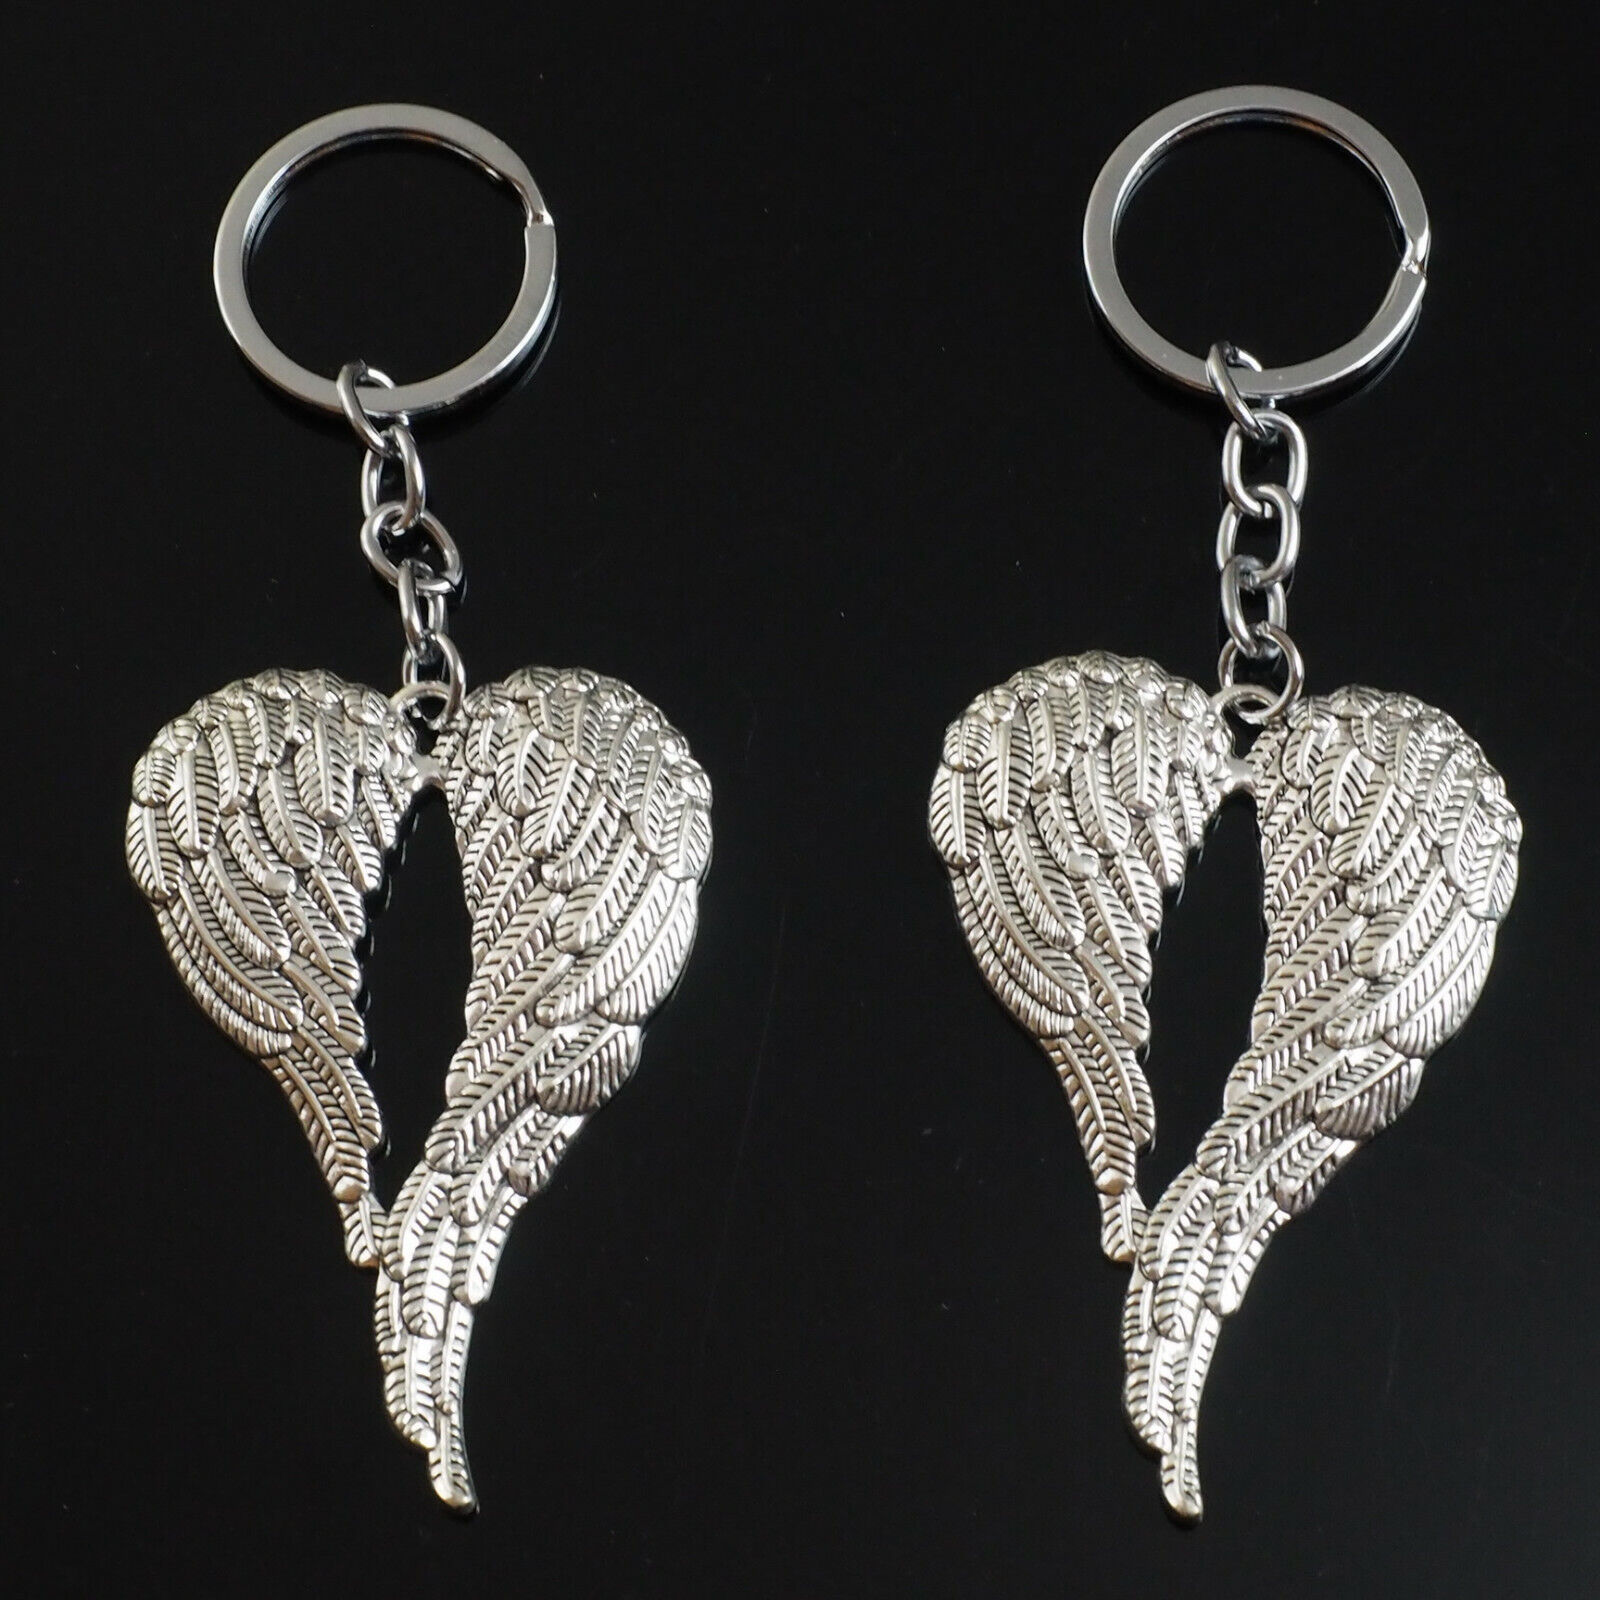 2x PCS - Angel Wings Heart Shape Feathers Charm Pendant Keychain Key Chain Gift